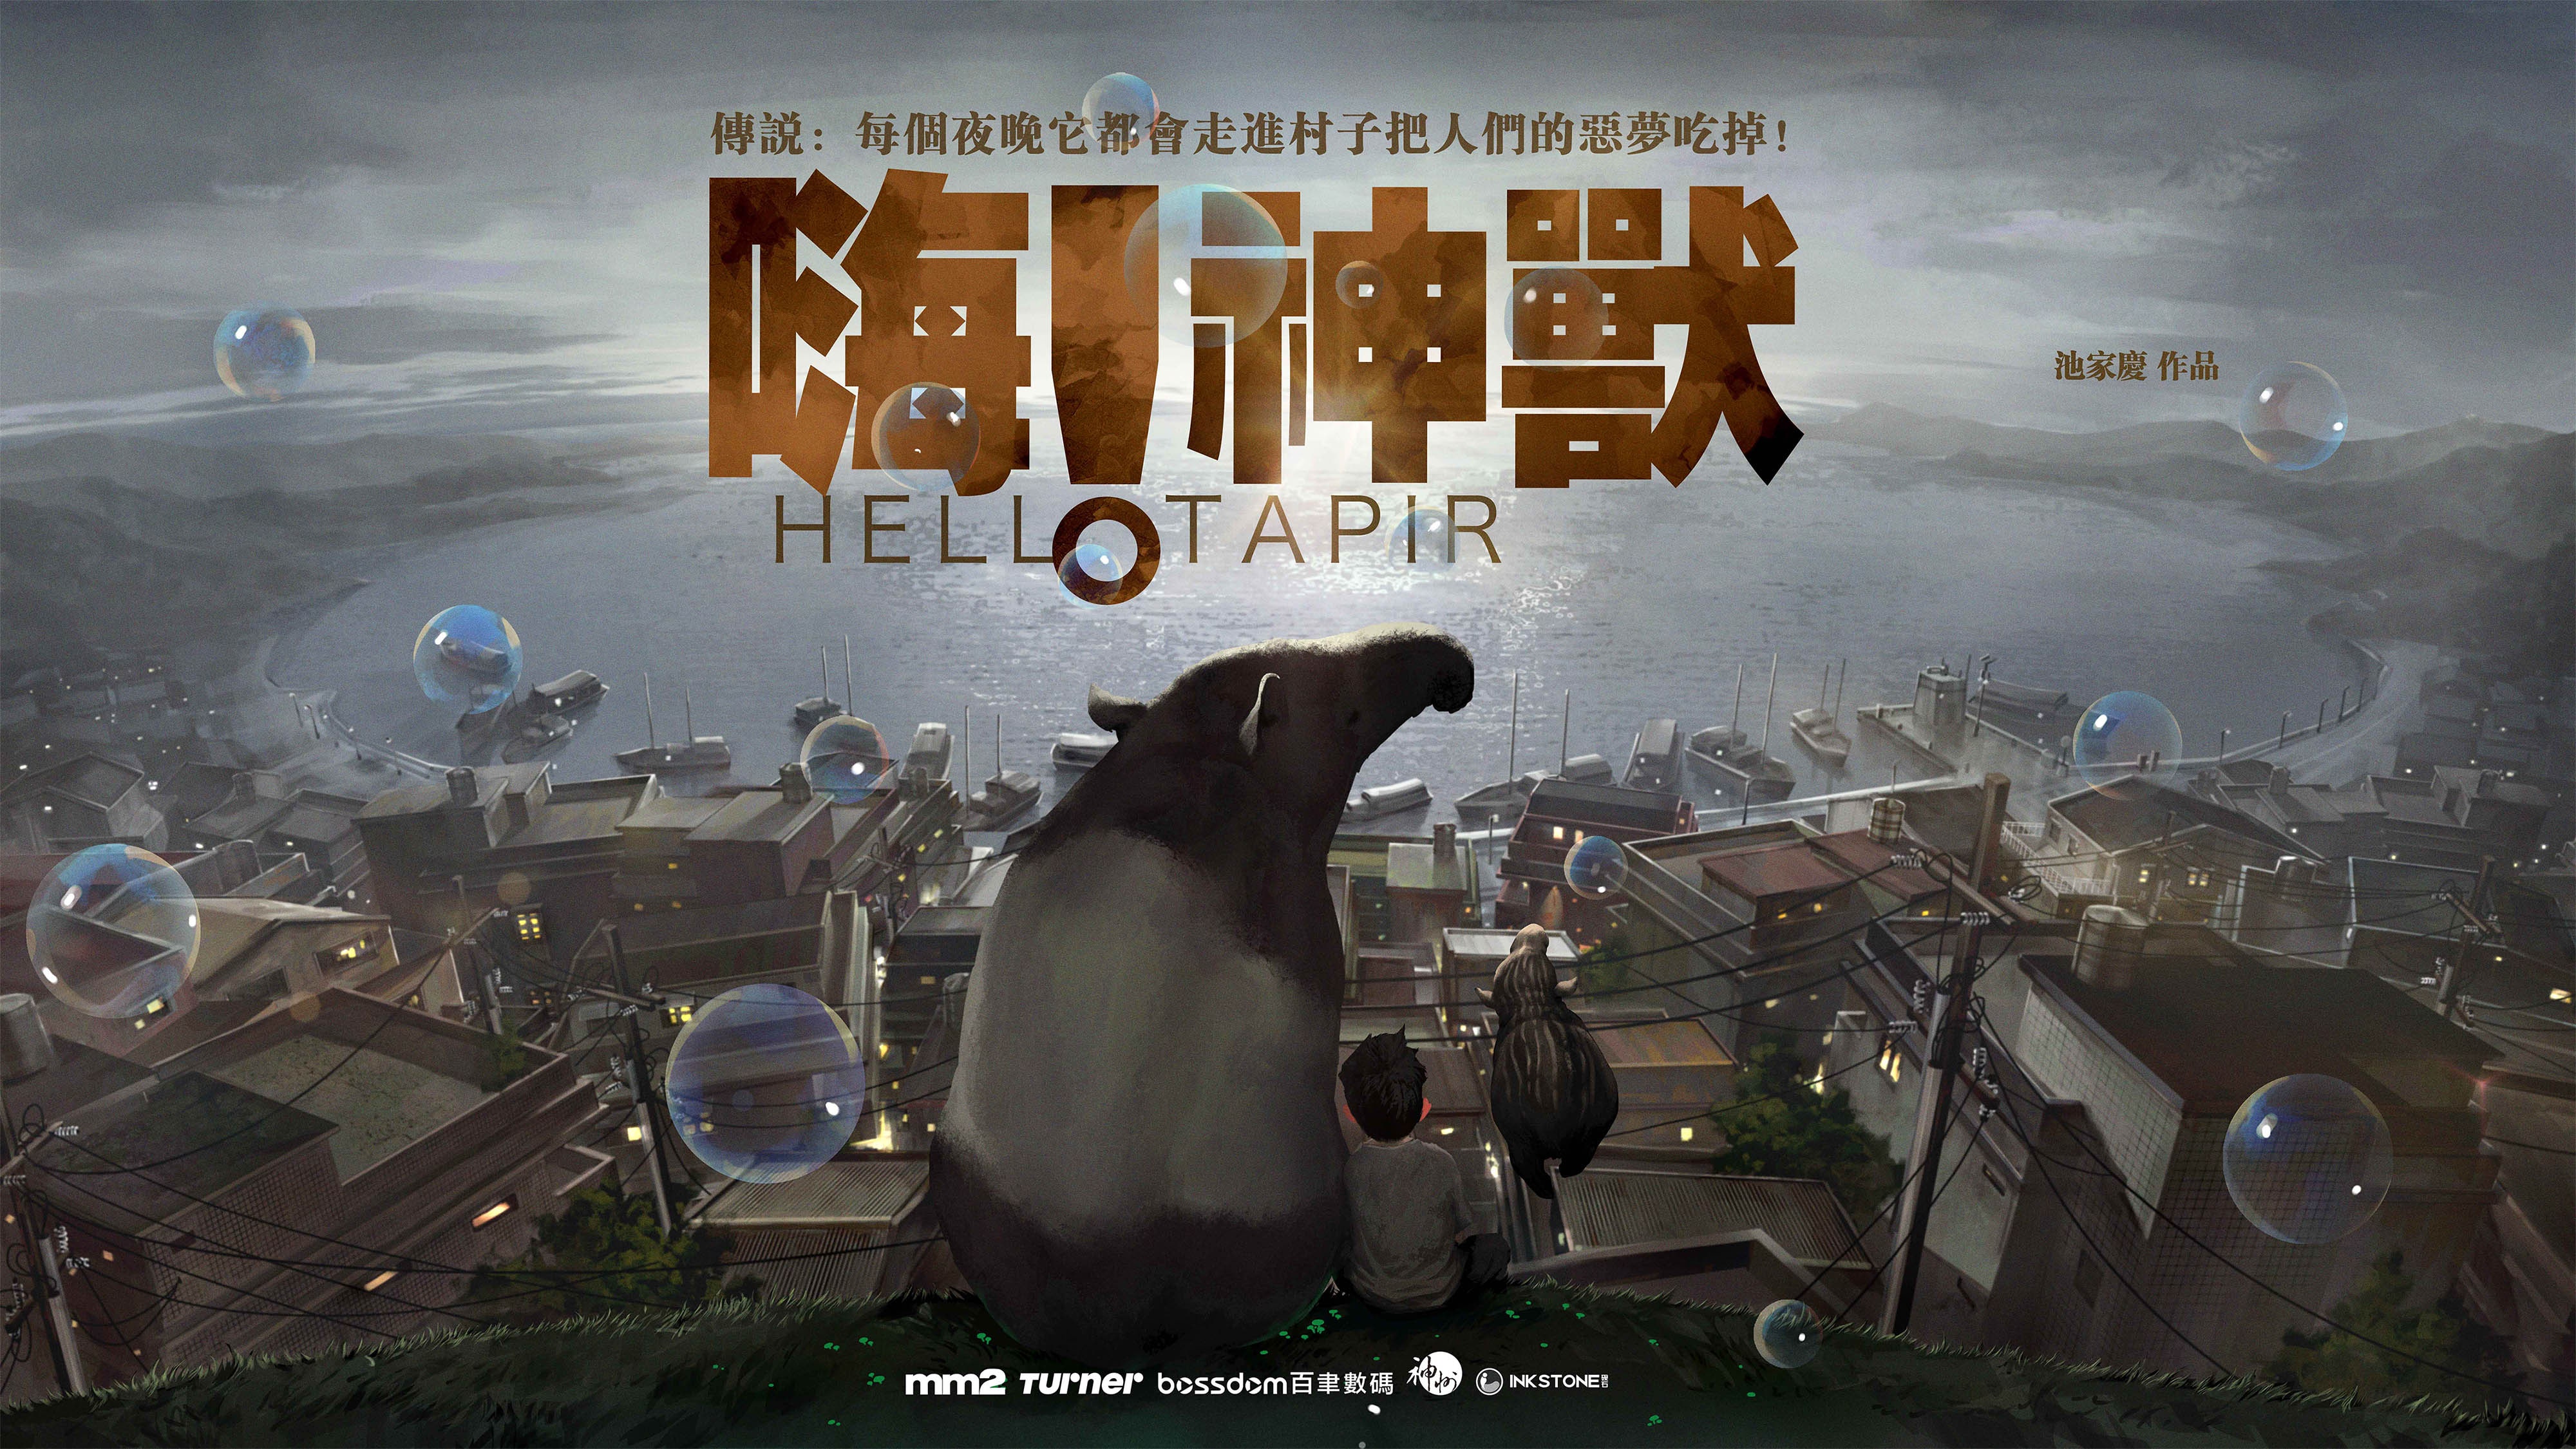 Hello! Tapir dibuat oleh sutradara mutakhir Chi Jiaqing dan memimpin tim penghargaan untuk menghabiskan 80 juta dolar Taiwan. Sumber: APPLAUSE (甲上娛樂)